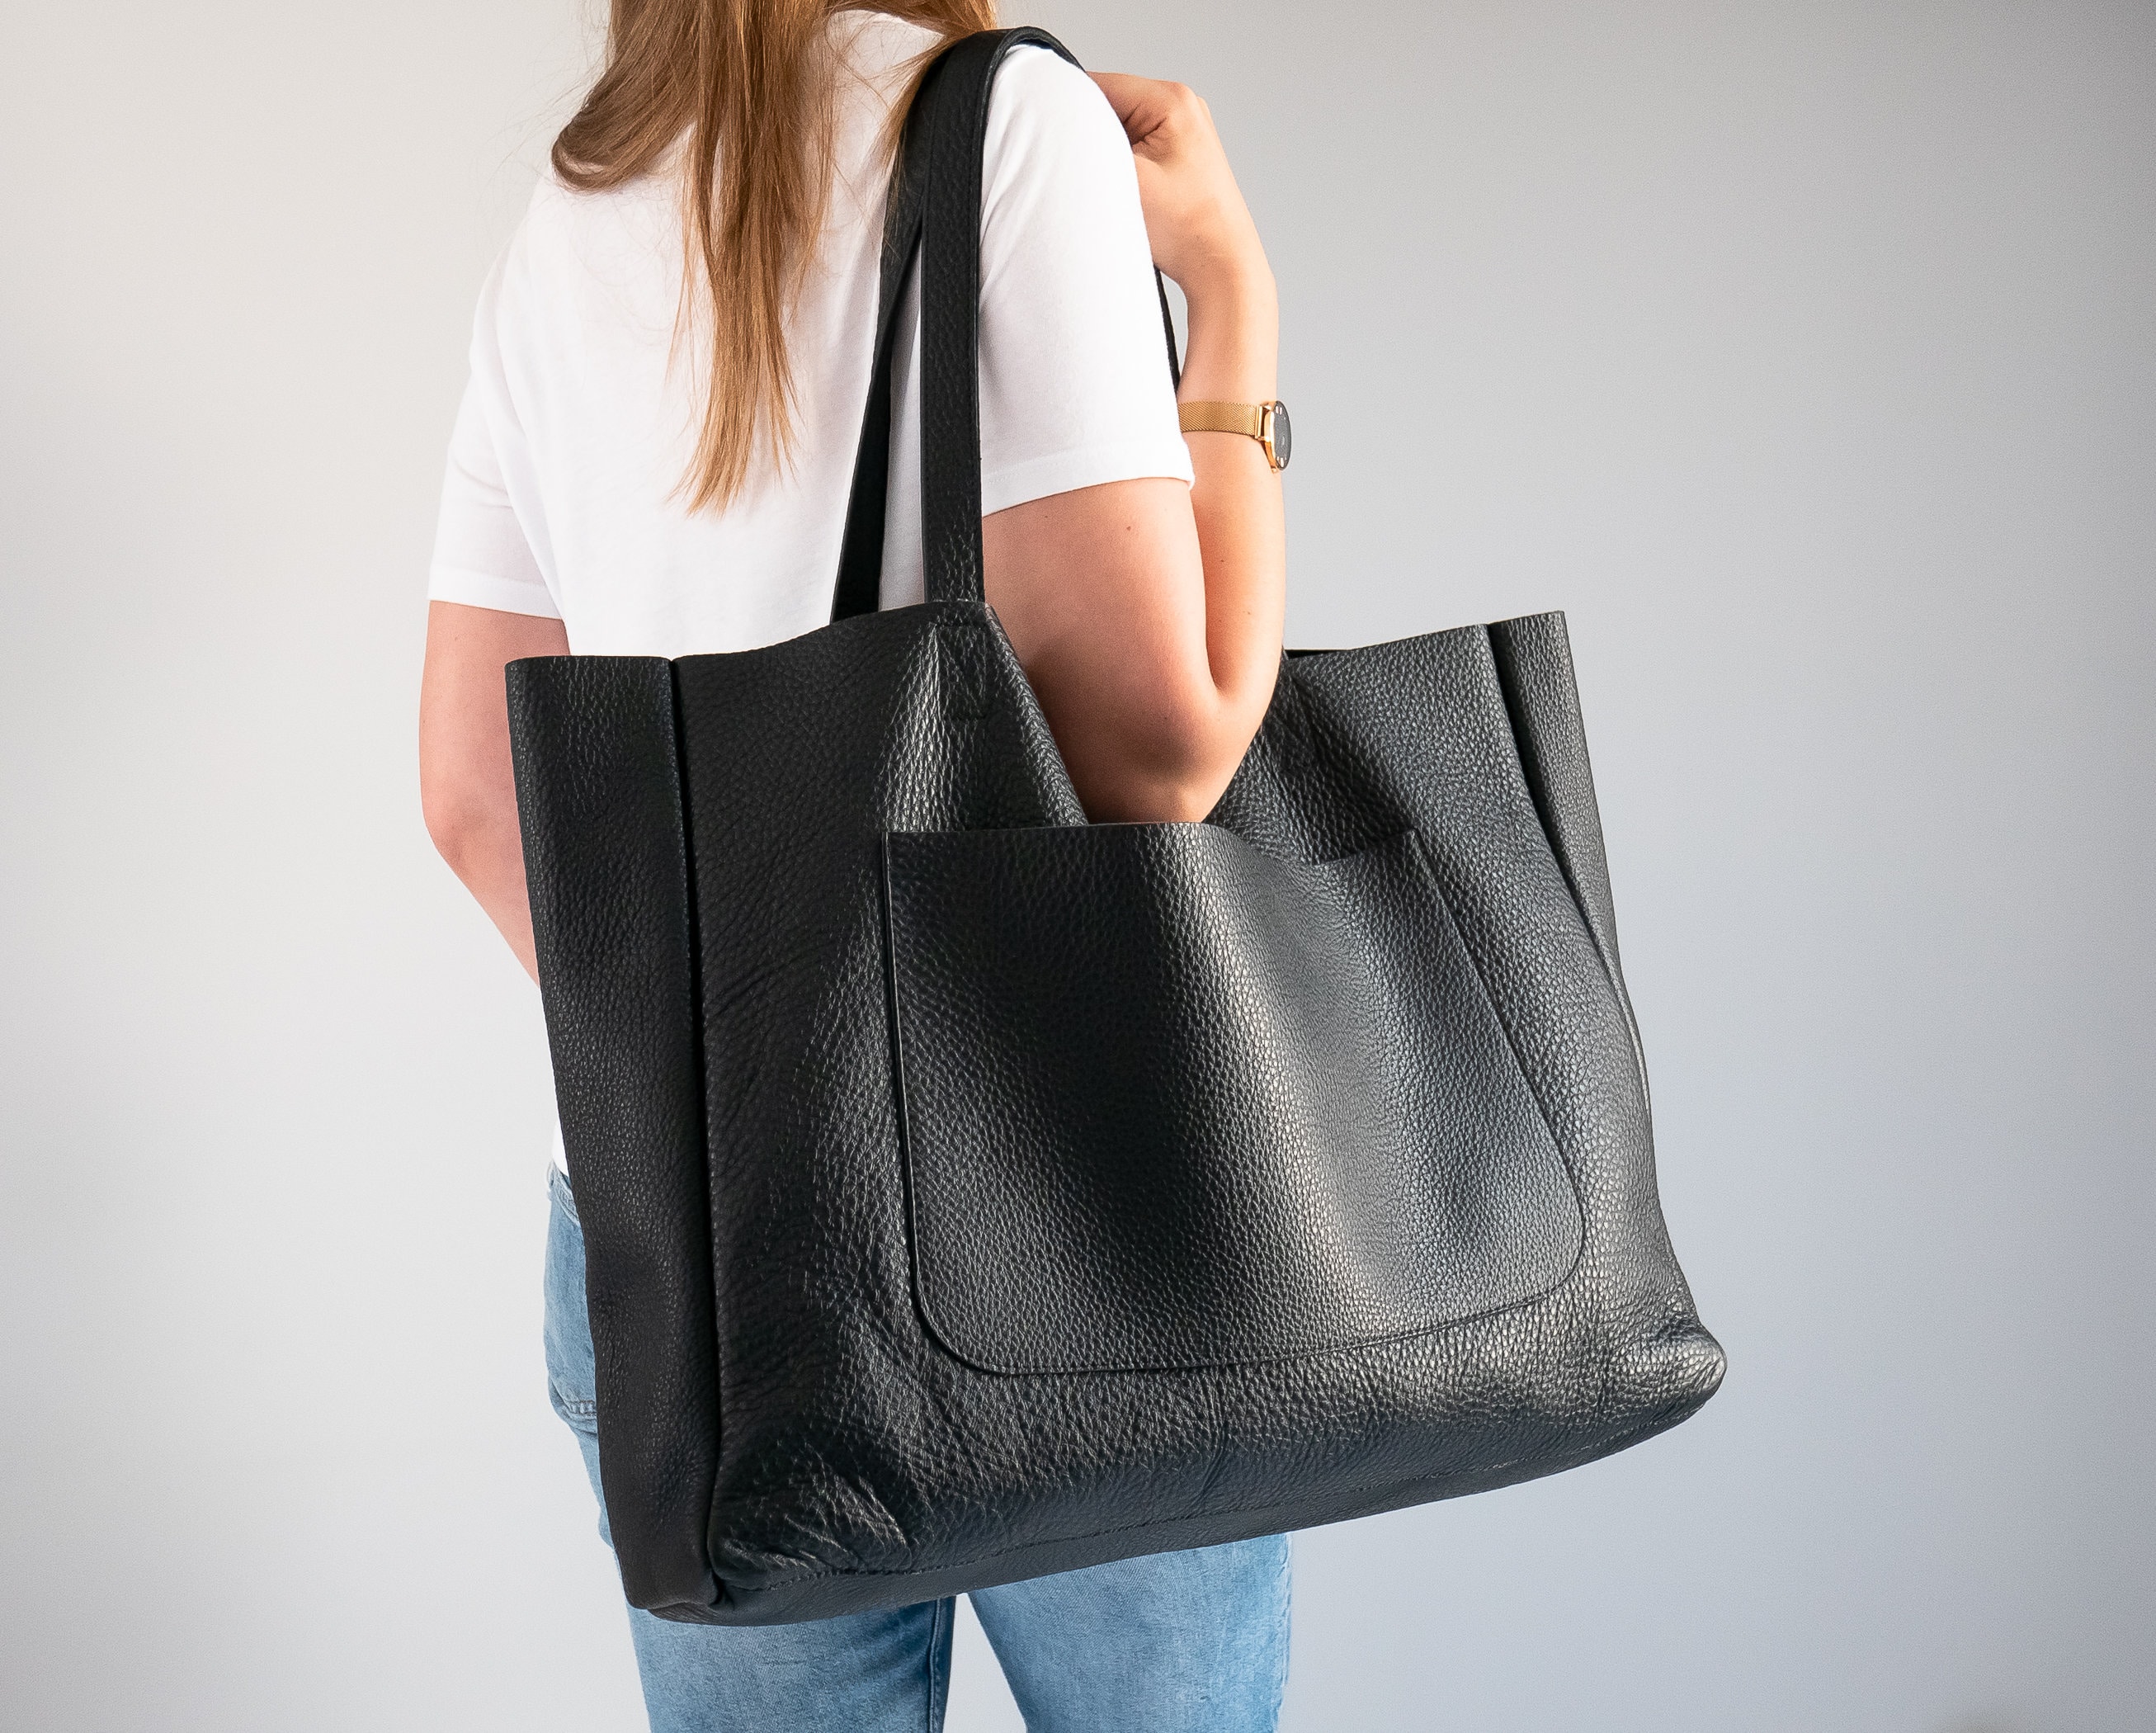 Black Leather Shopper, Large Tote Bag, Shopping Bag, Xxl Handbag